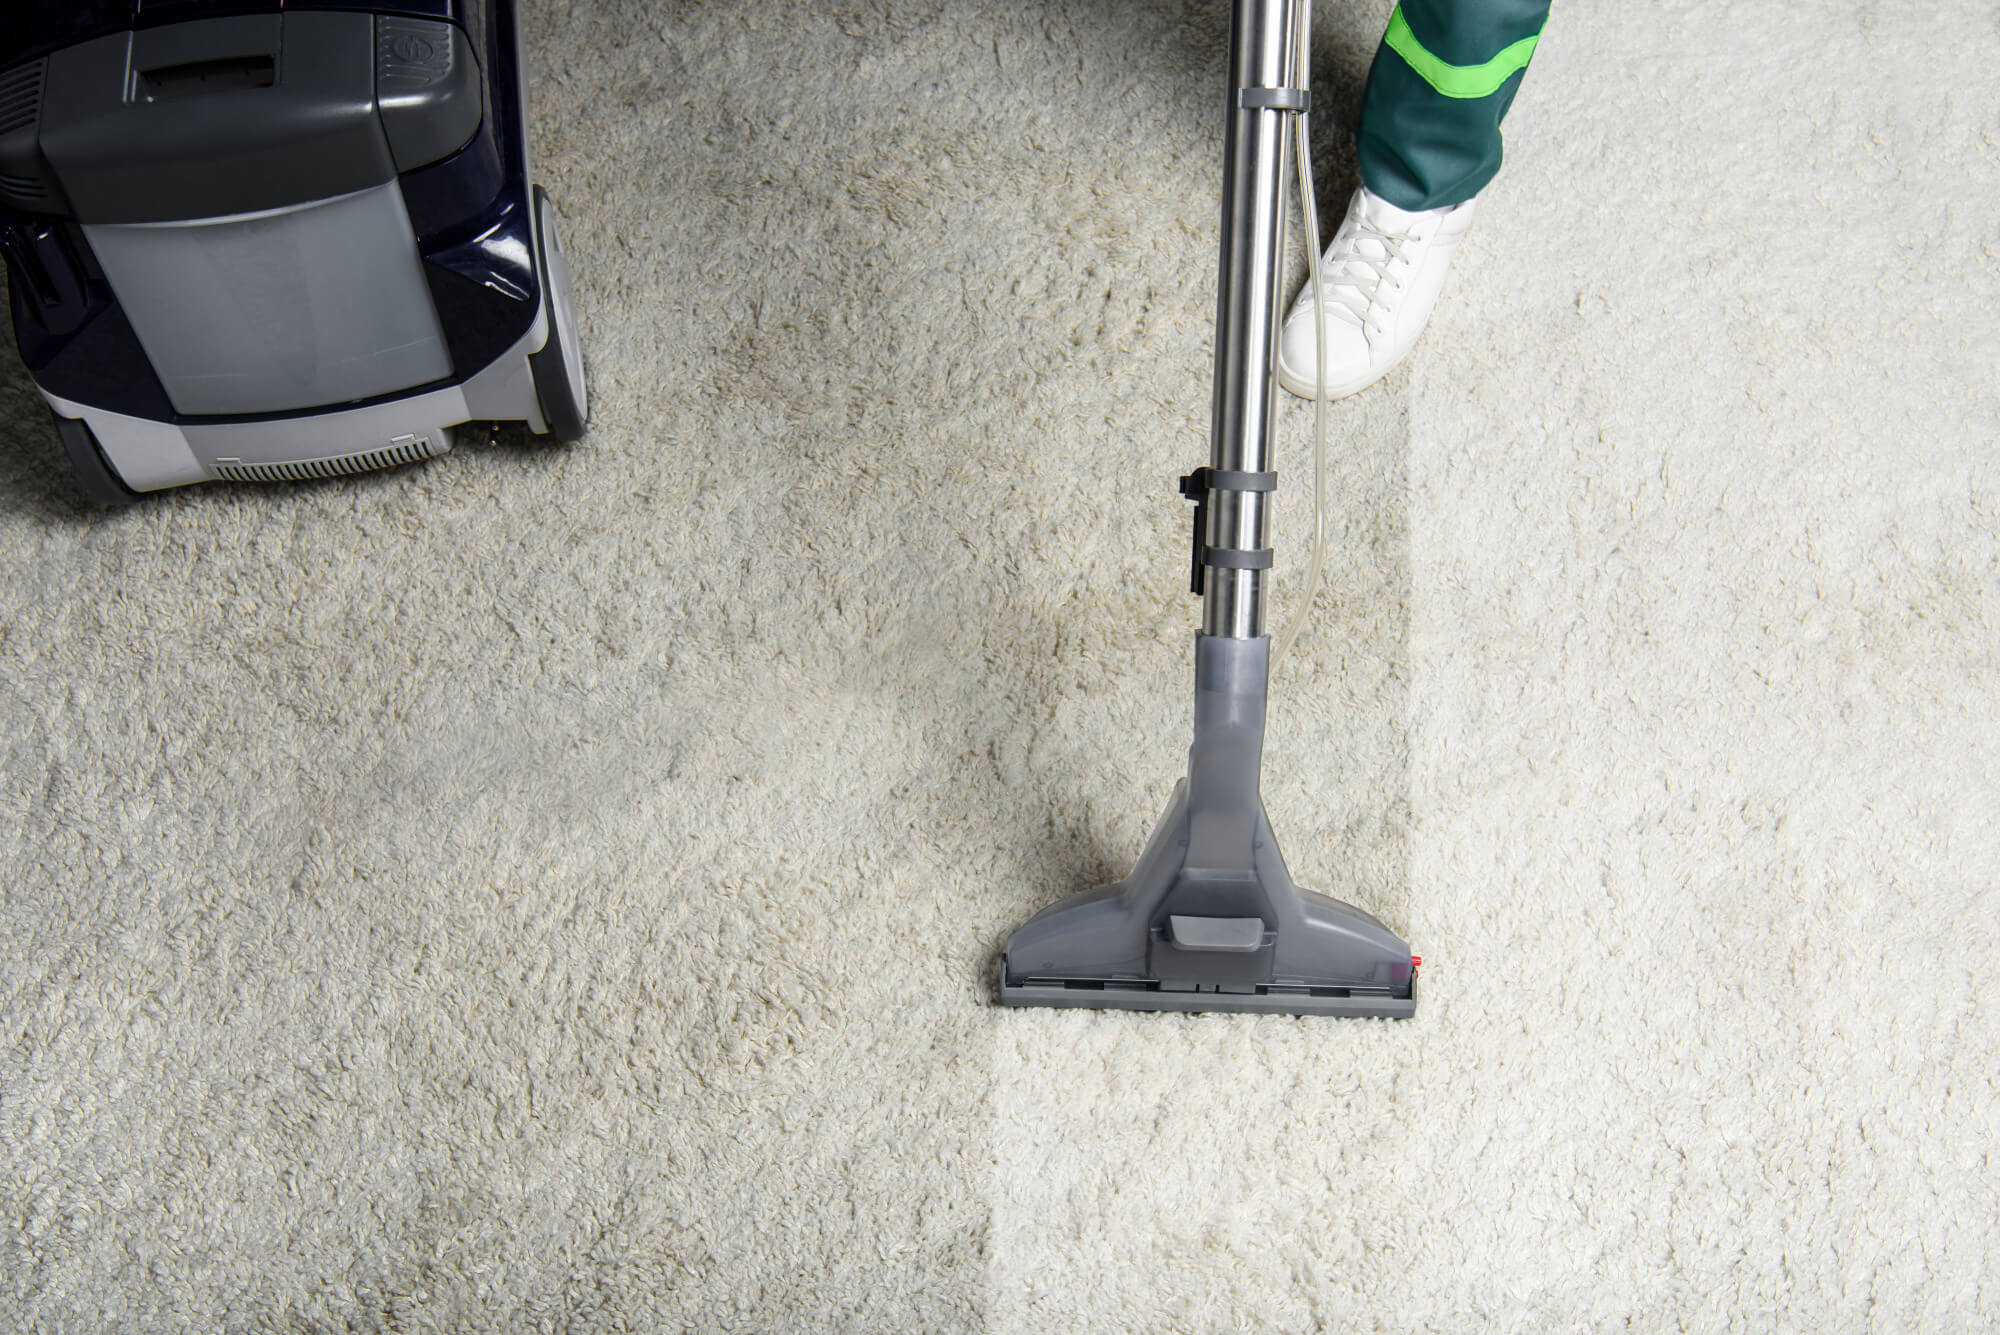 65ef7bd173315f8498f4a0a8 carpet cleaning 1